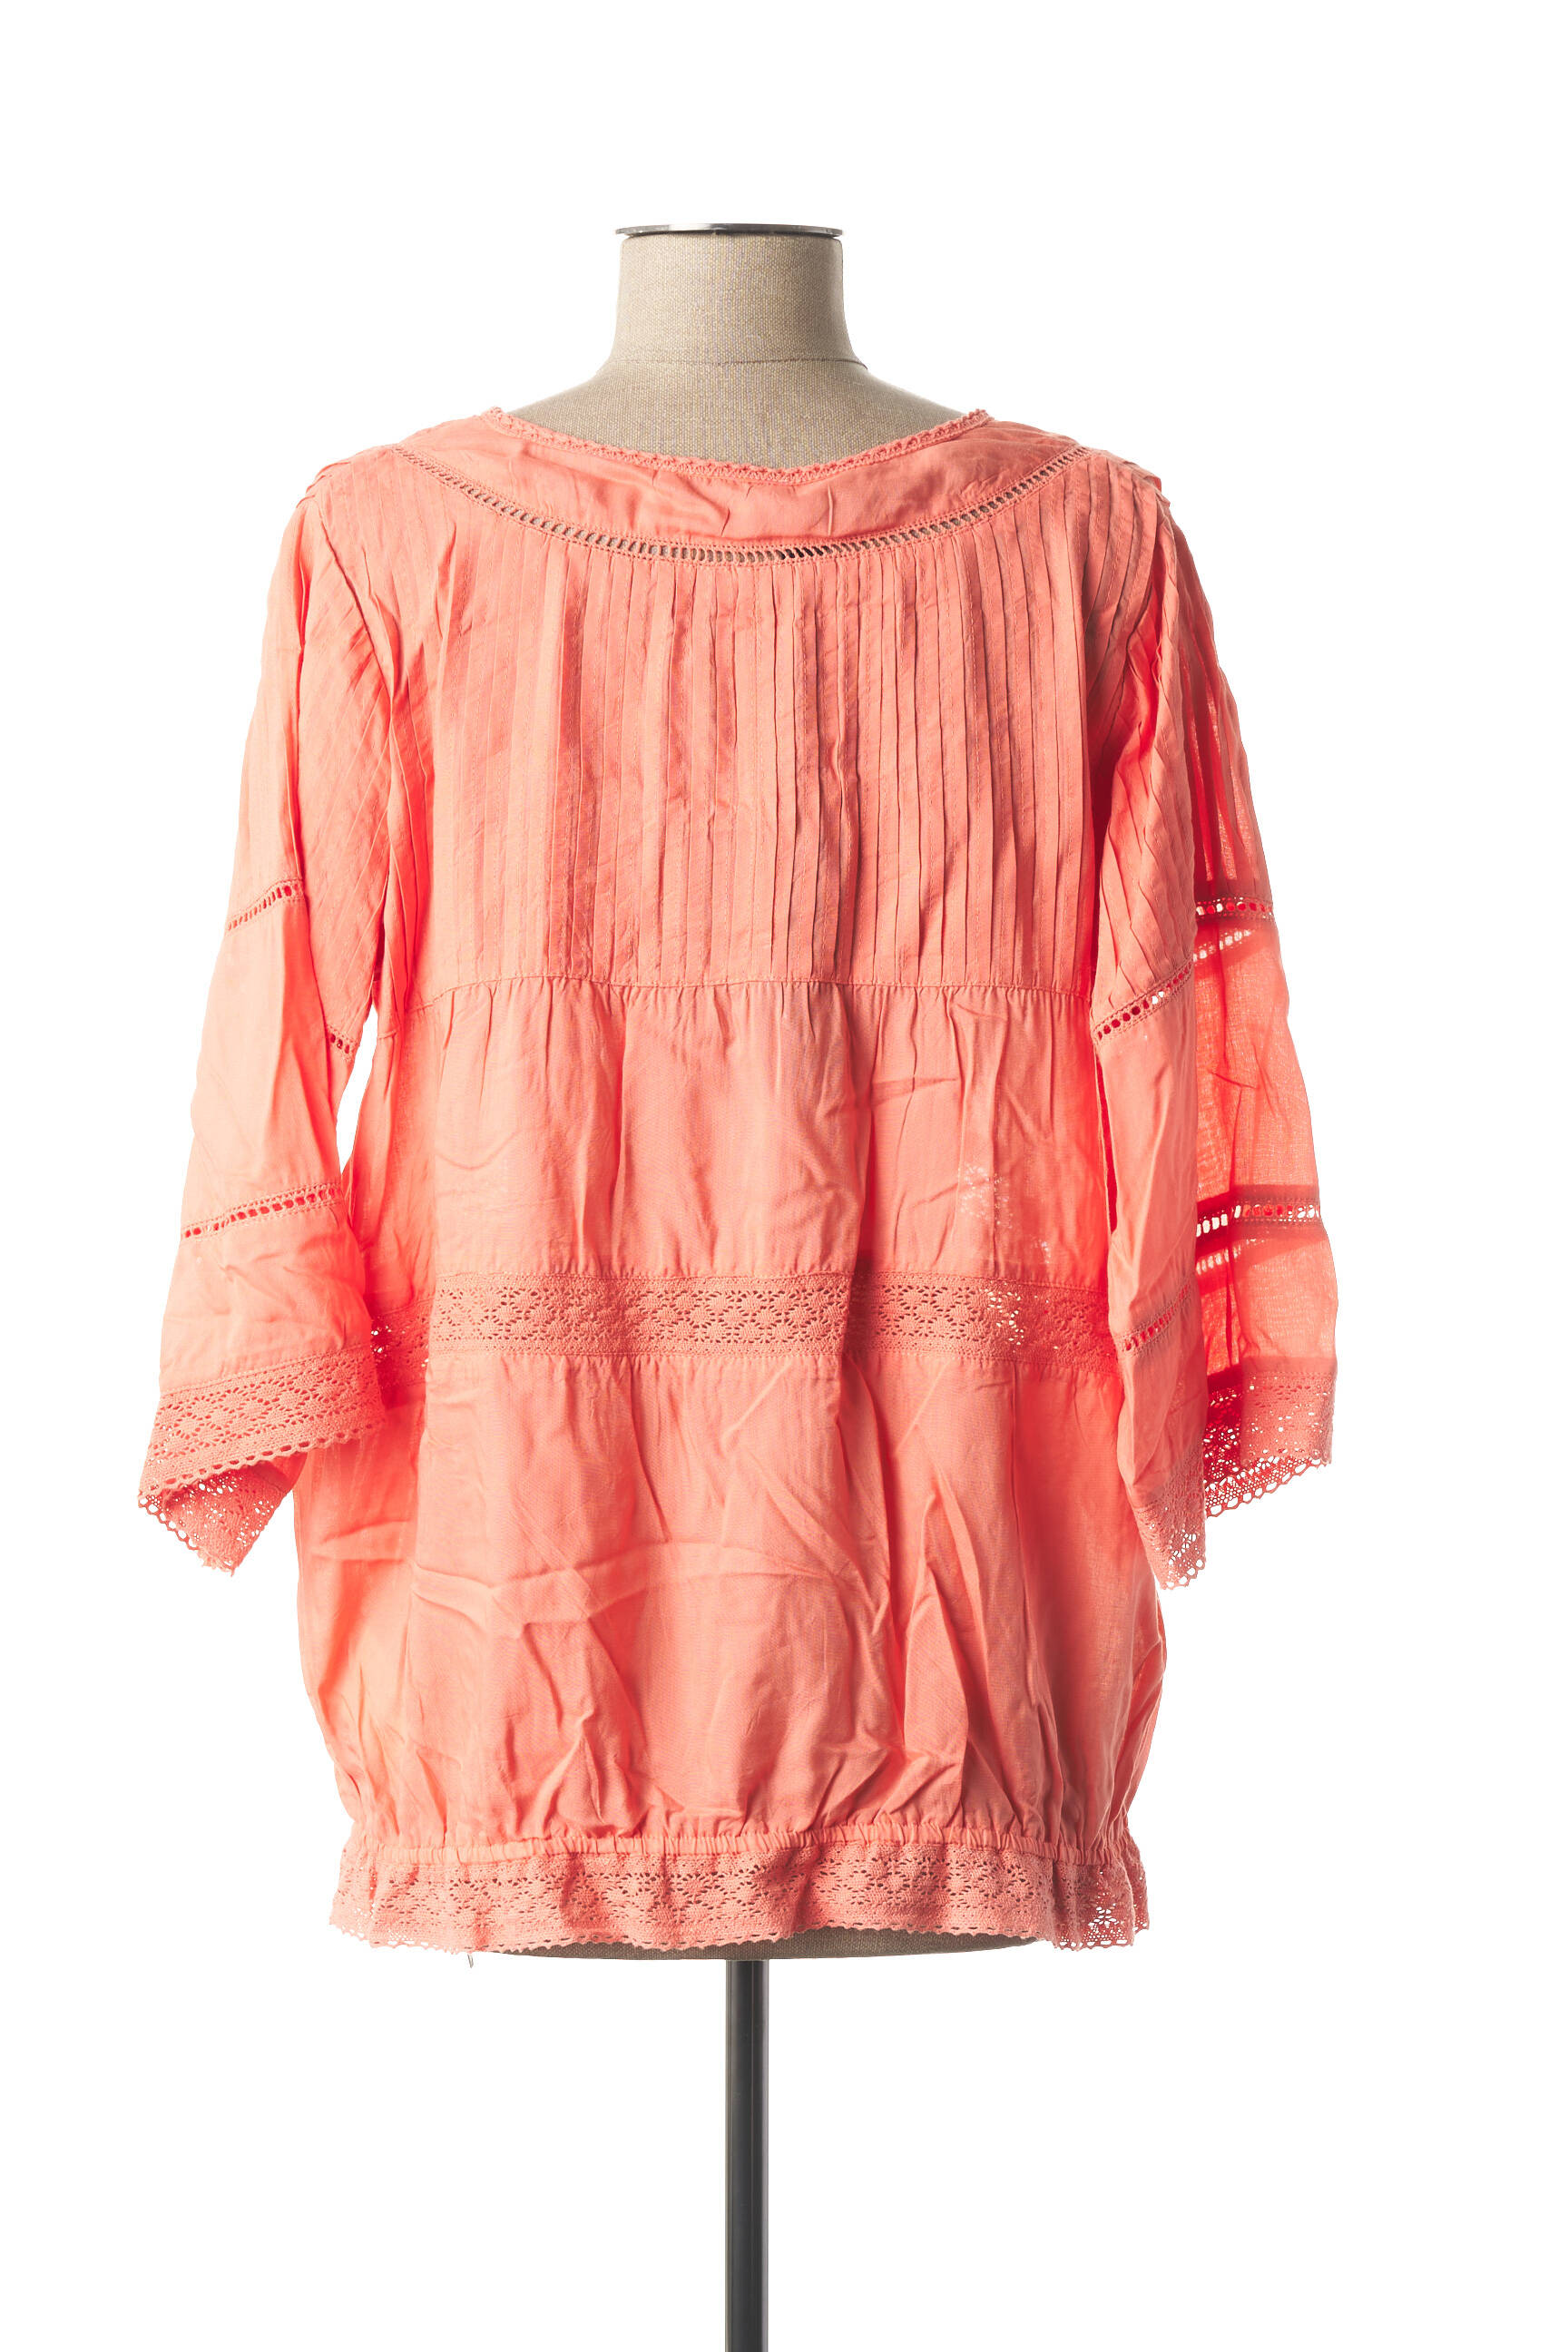 Mode Blouses Tunique-blouses Tunique-blouse orange fonc\u00e9 style d\u00e9contract\u00e9 